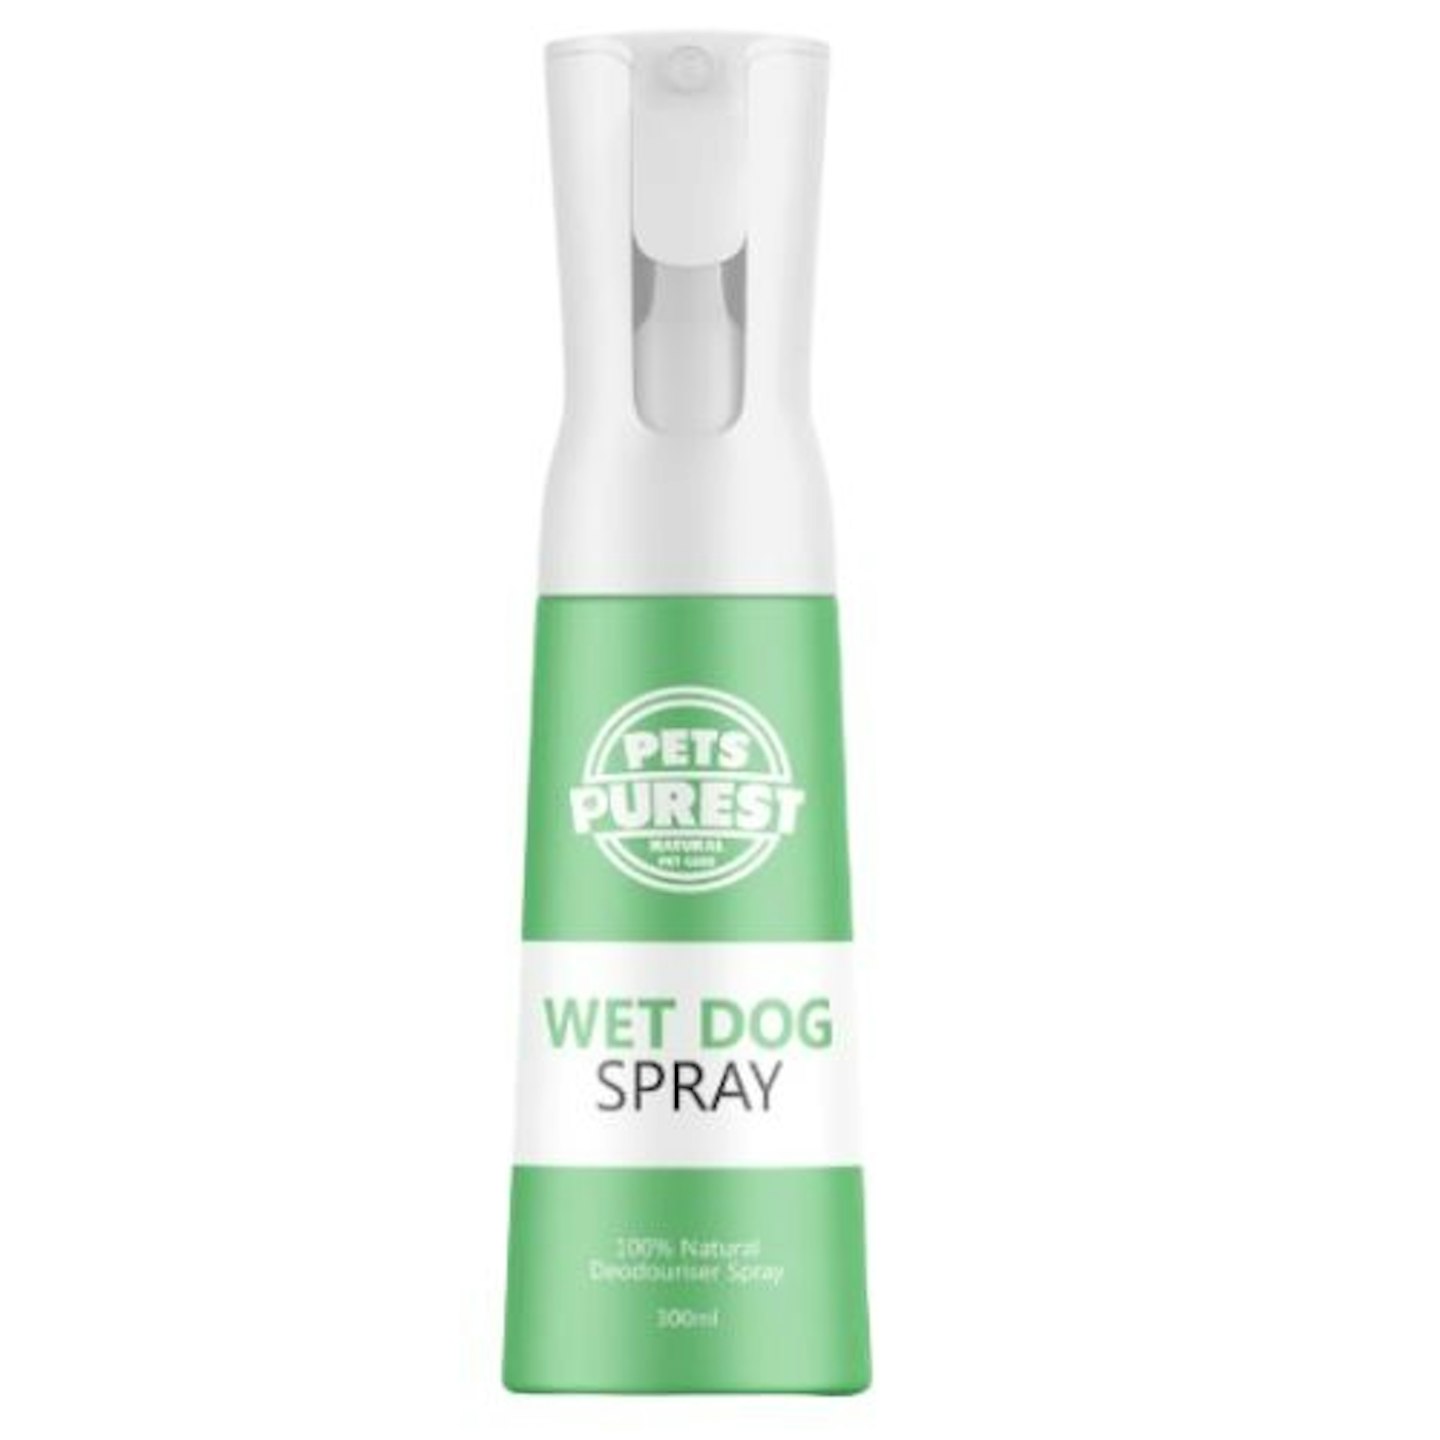 Pets Purest Wet Dog Deodorant Spray